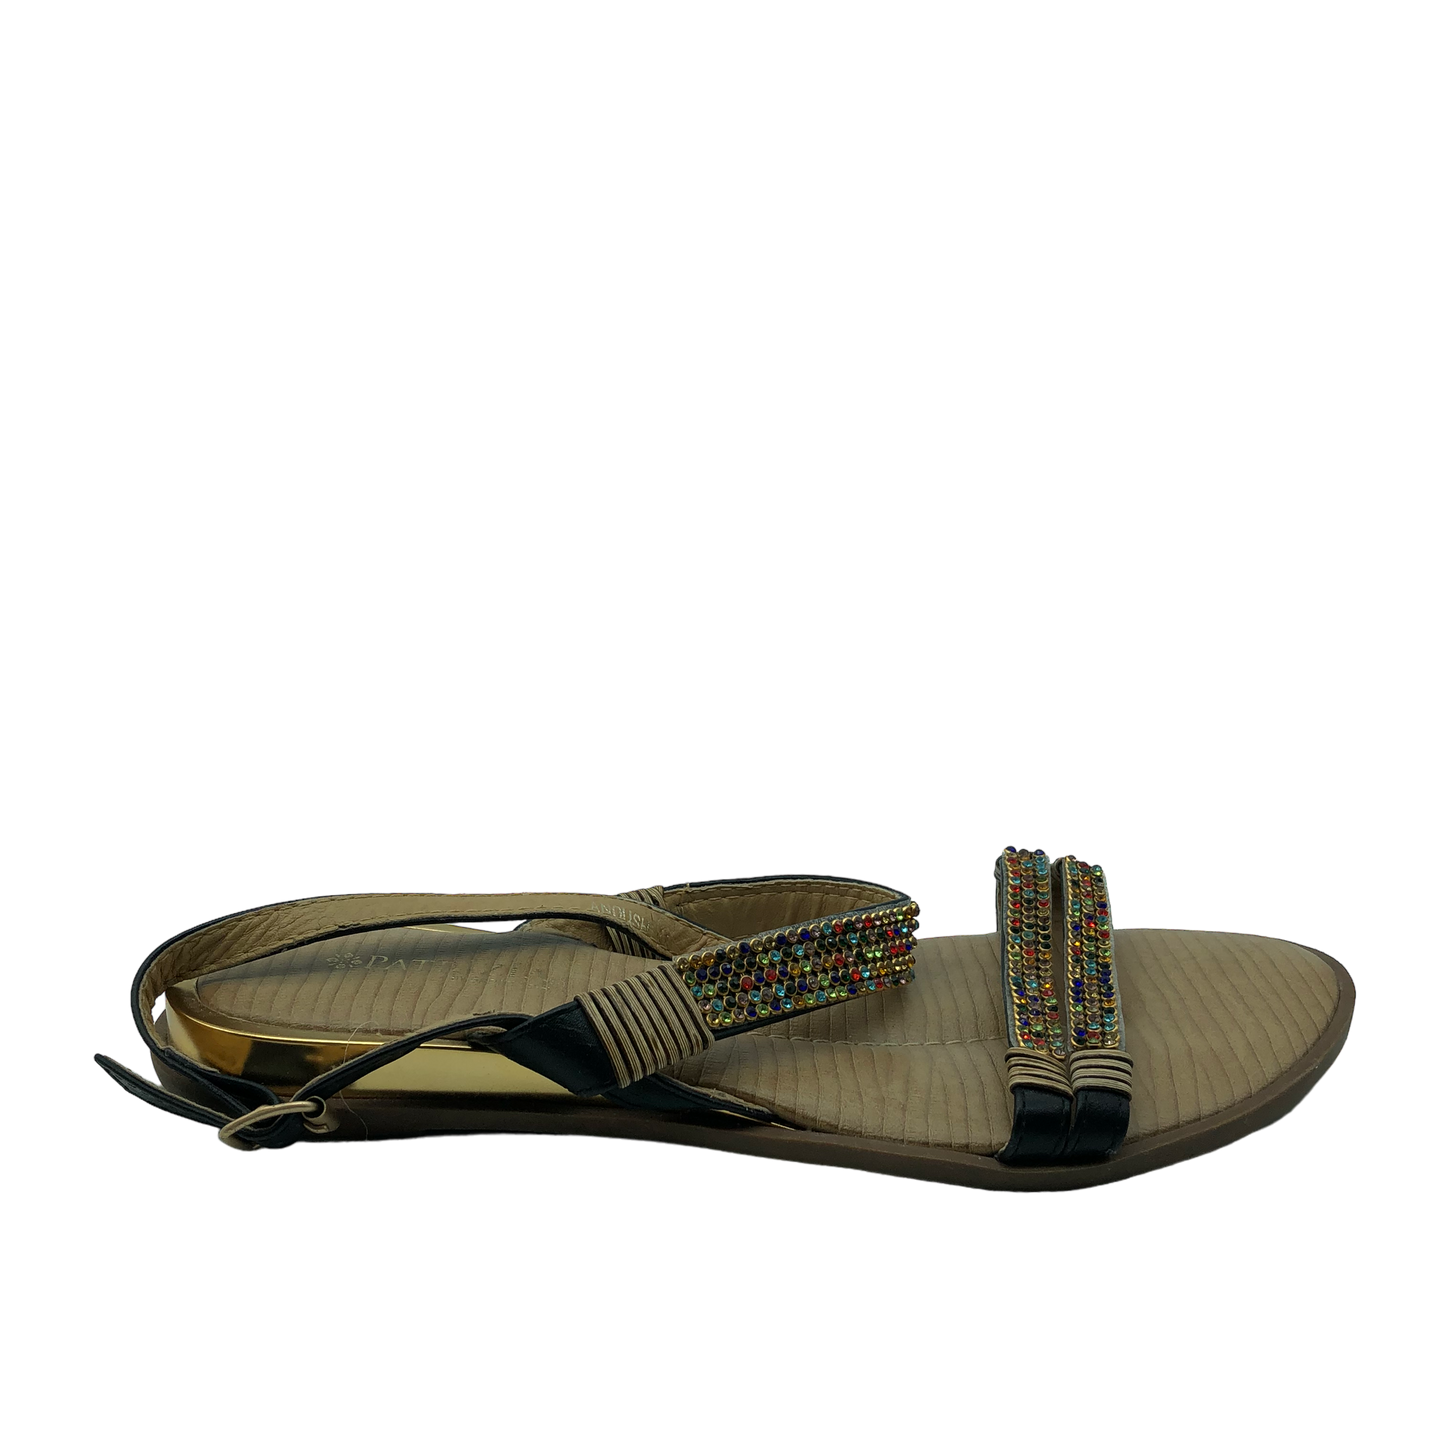 Sandals Flats By patrizia Size: 11